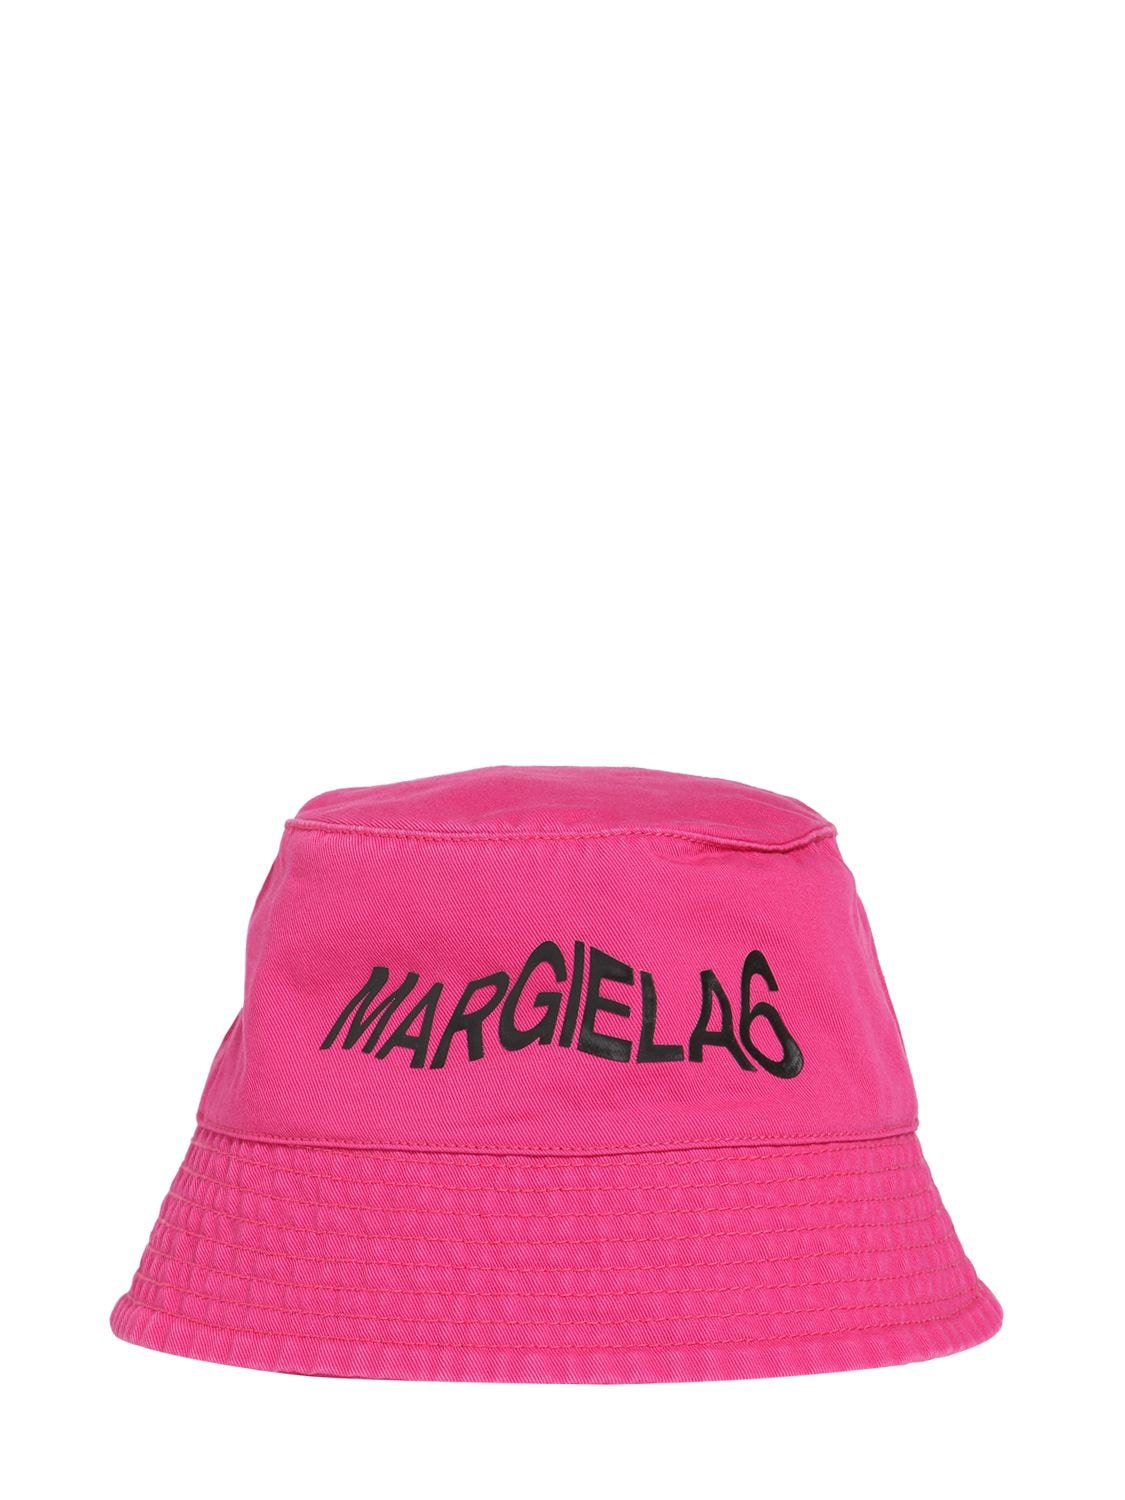 MM6 MAISON MARGIELA LOGO PRINT COTTON BUCKET HAT